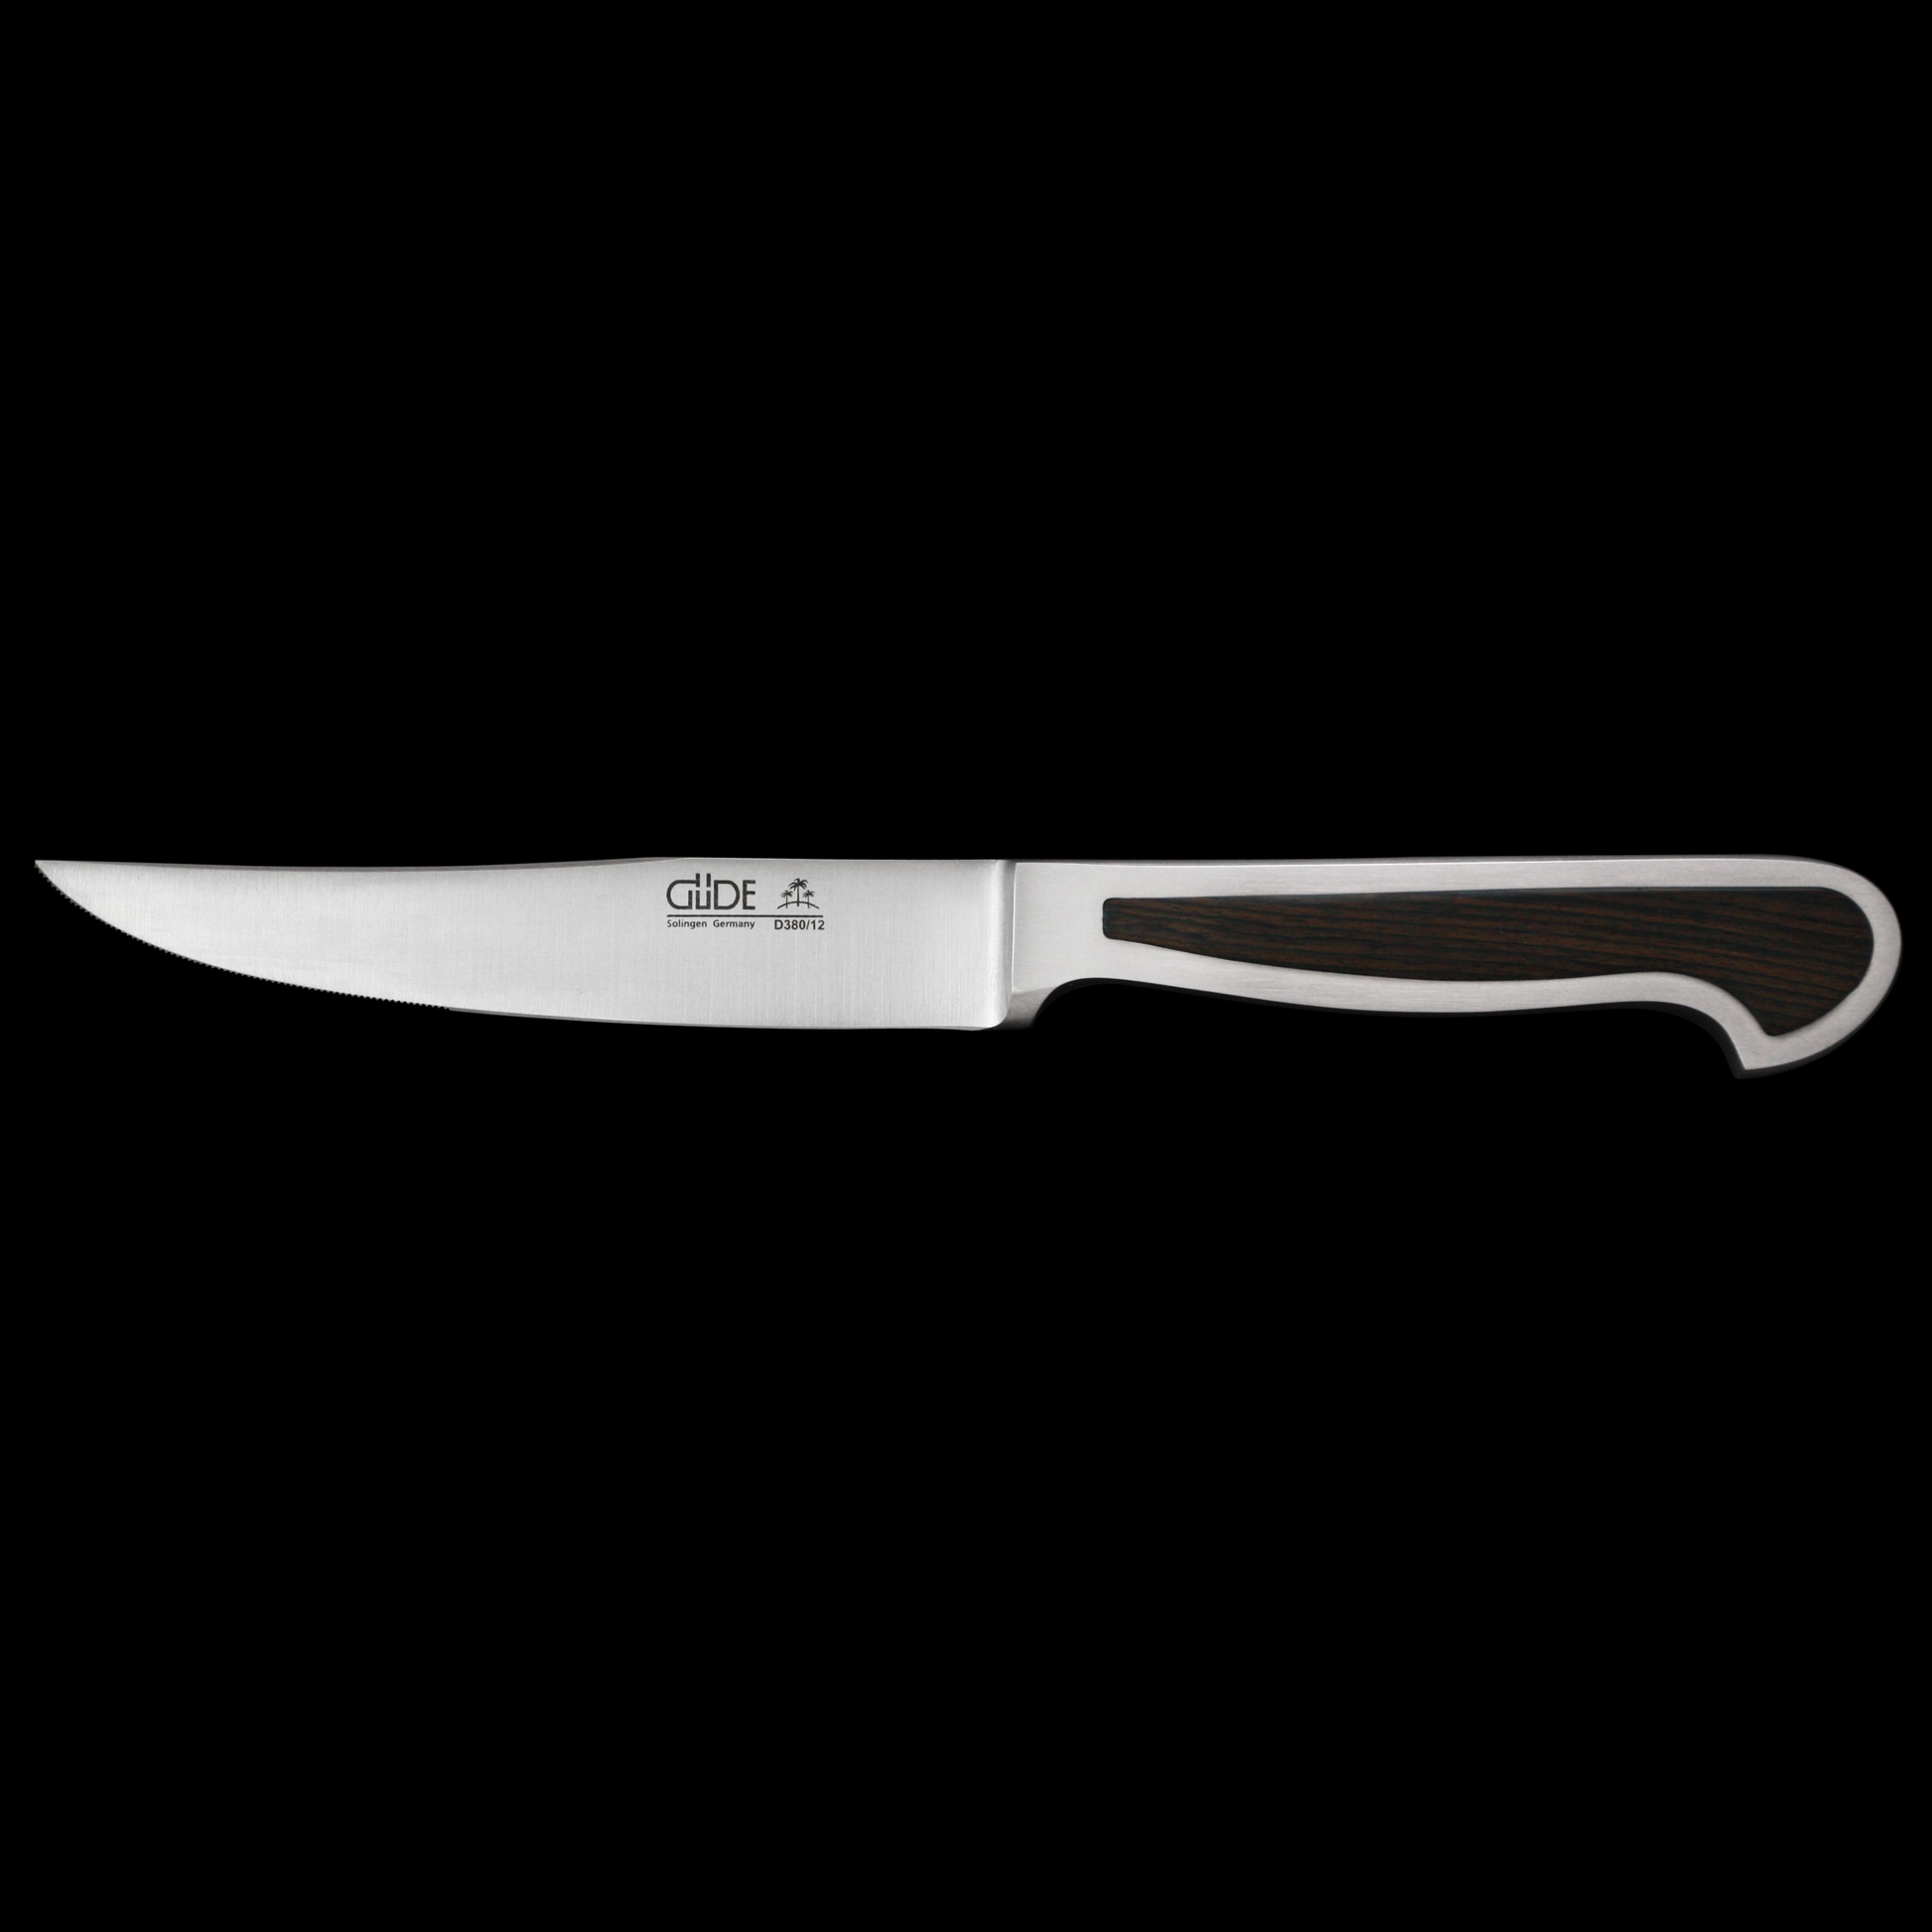 Gude Delta Series Forged Double Bolster Porterhouse Steak Knife 4 1/2,  African Black Wood Handle